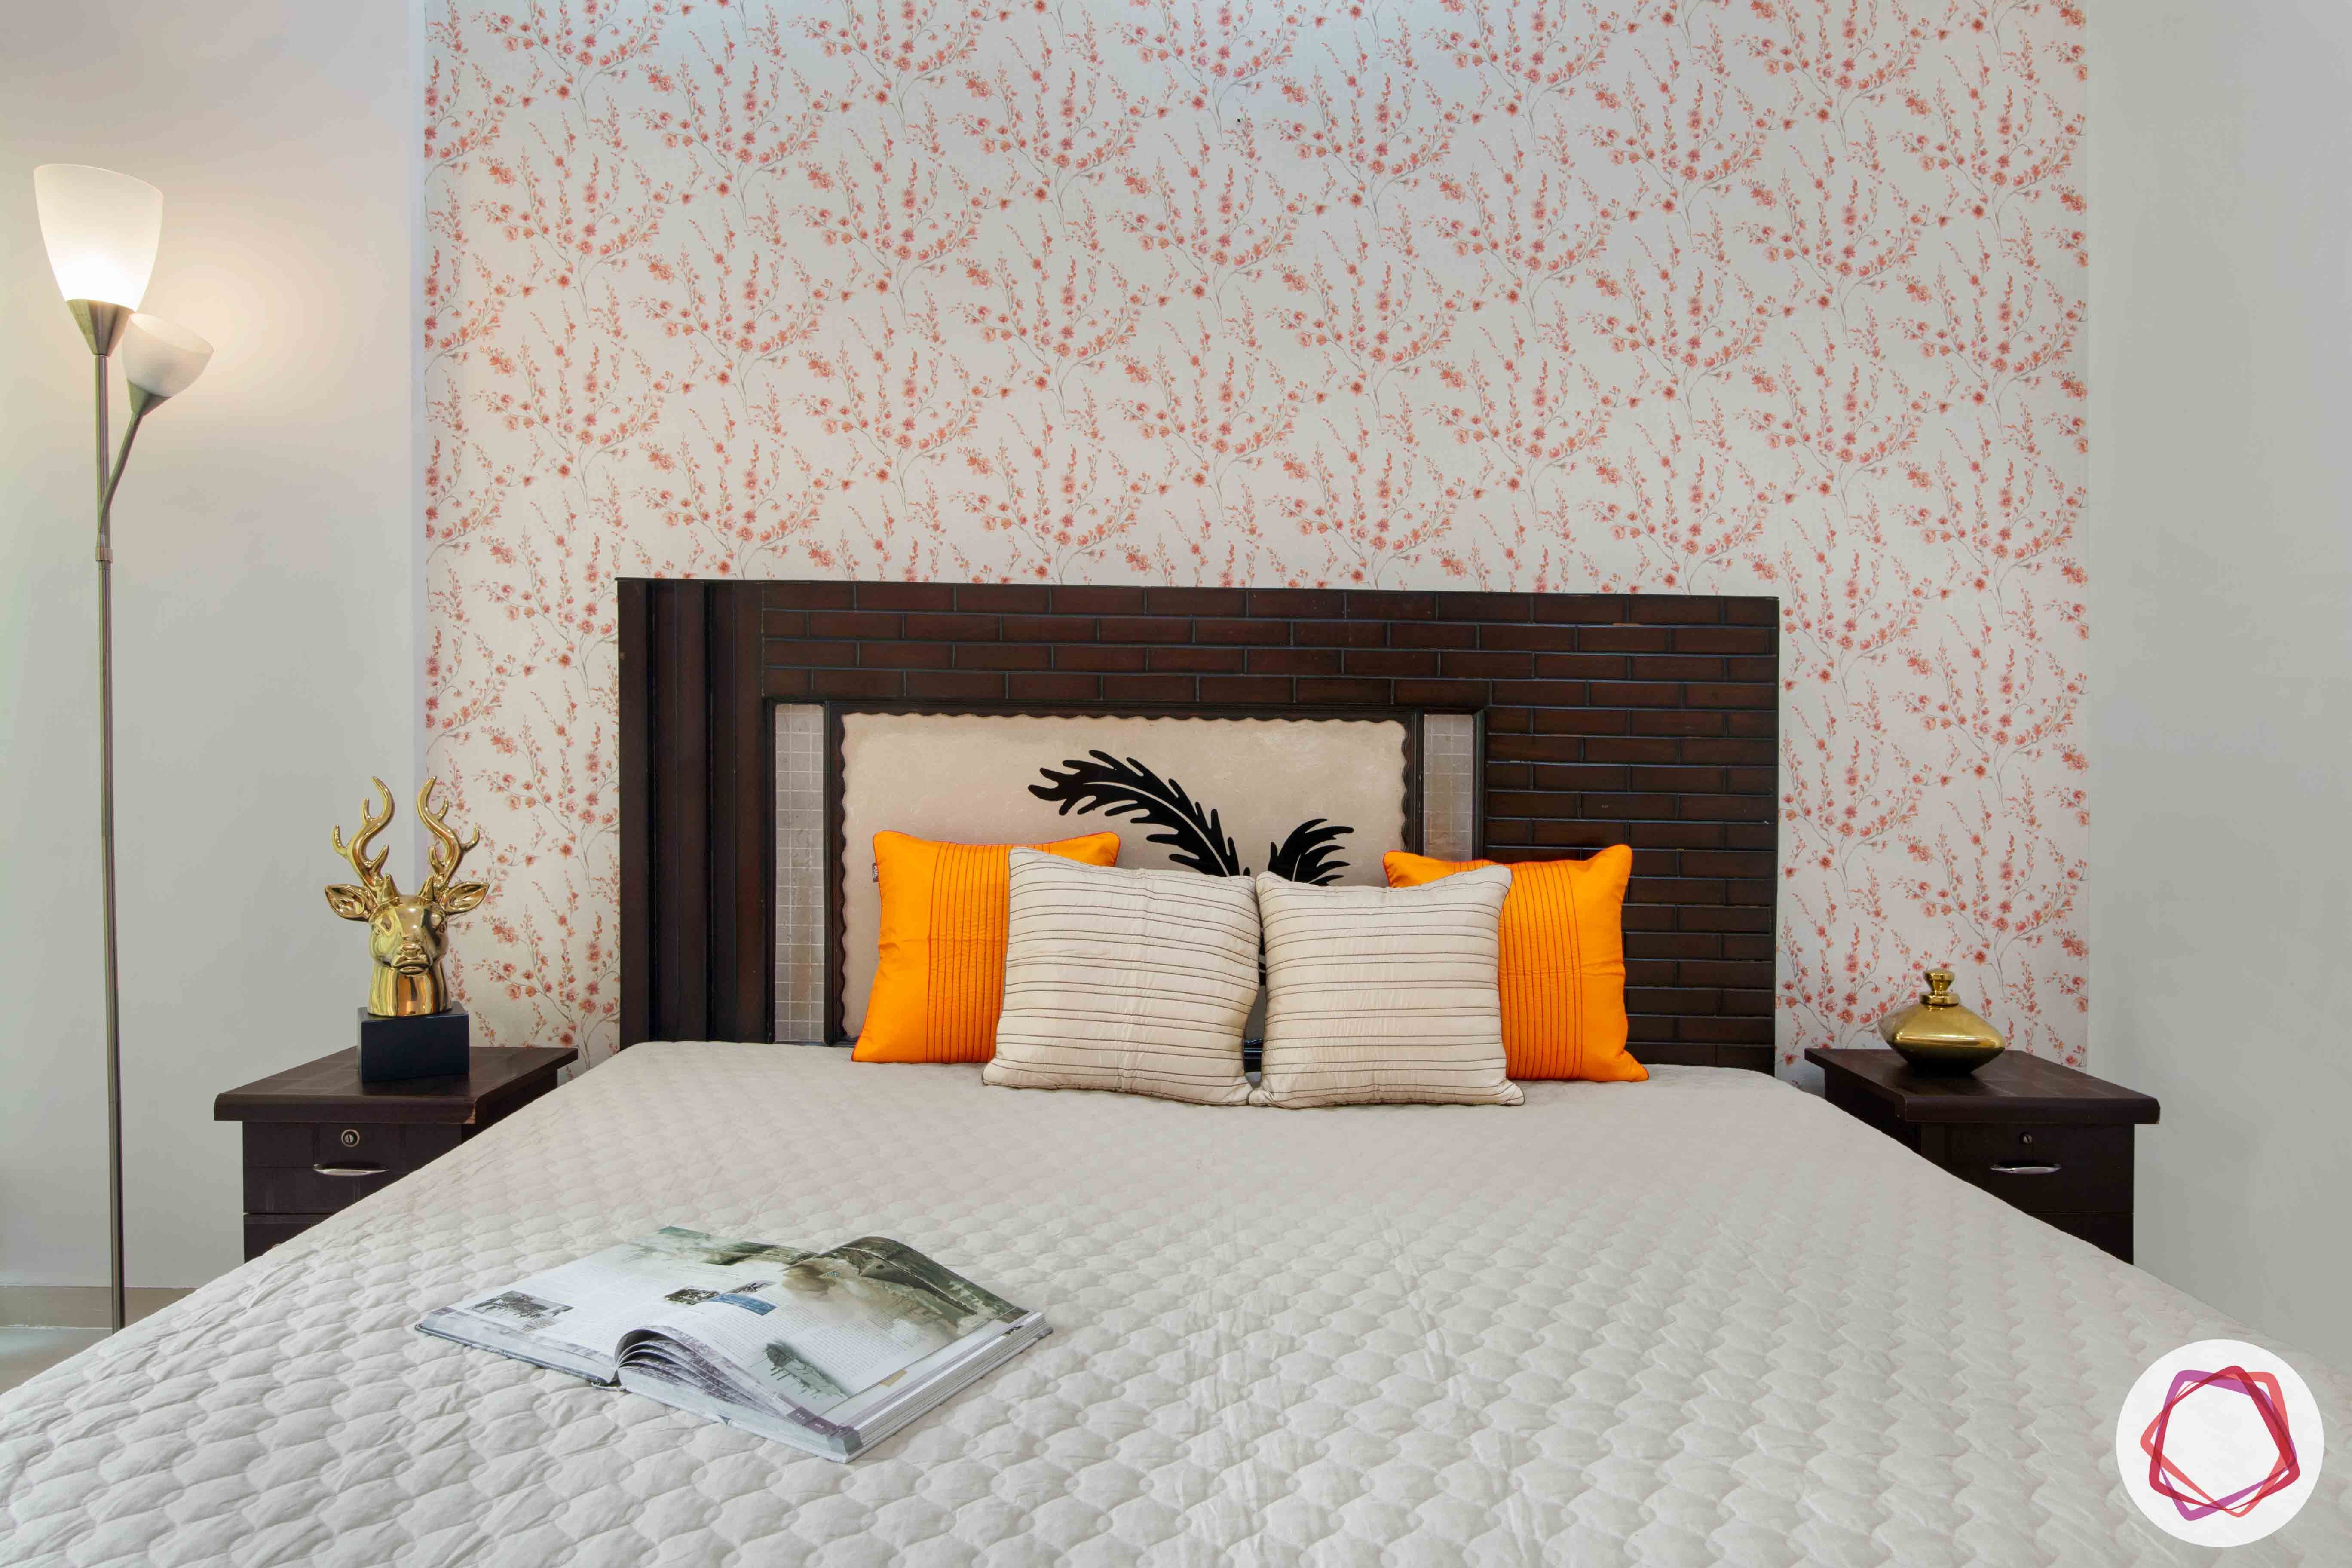 3bhk flat interior design-floral wallpaper designs-wooden headboard designs